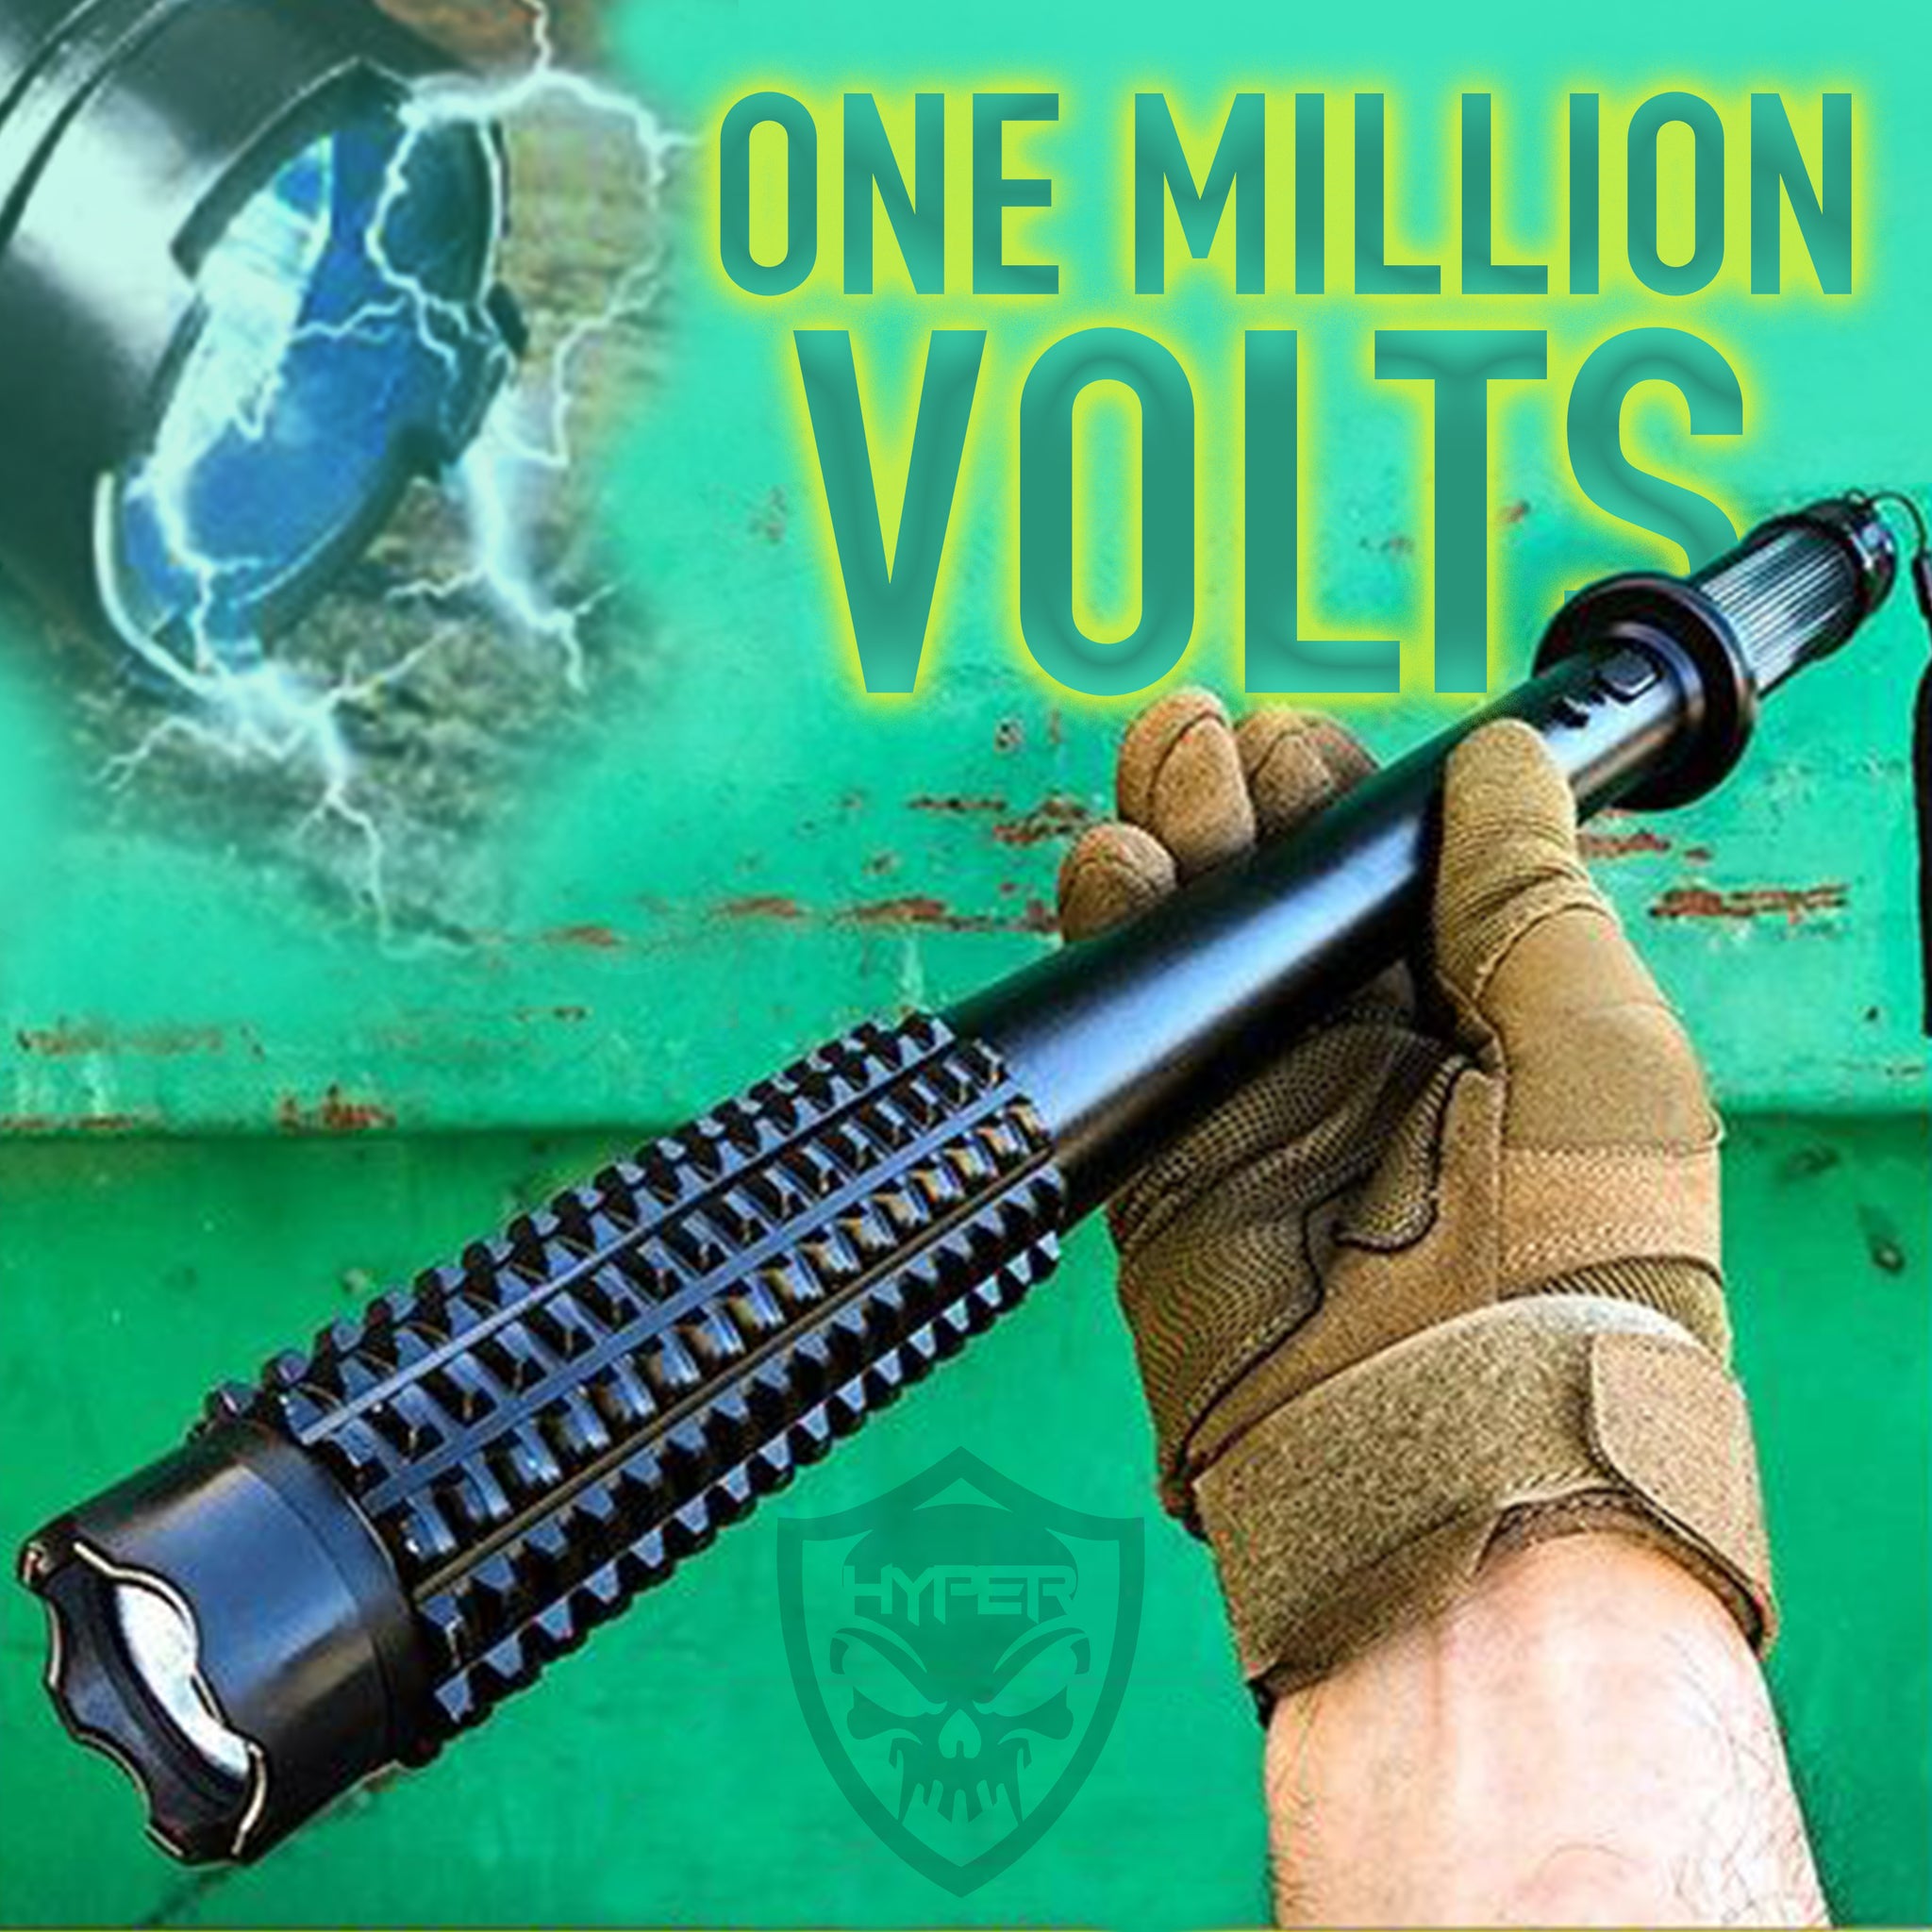 One Million Volt Stun Gun